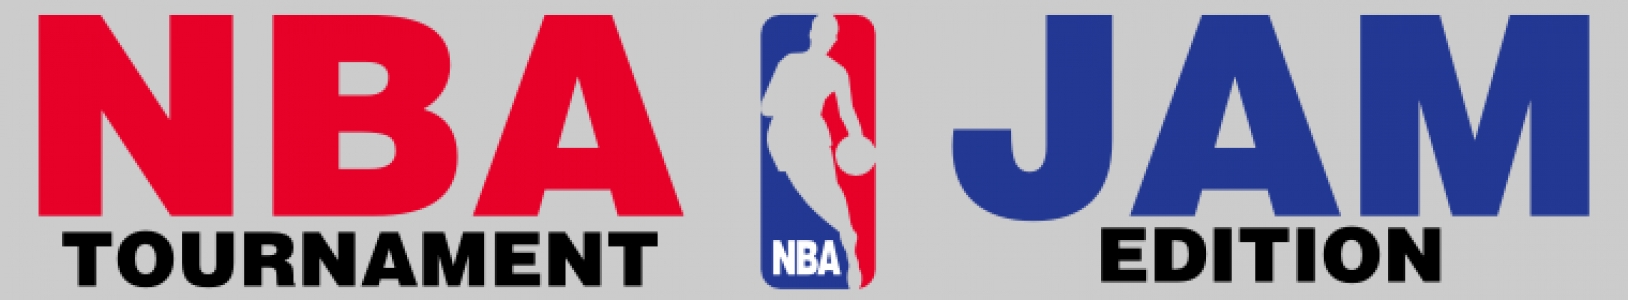 NBA Jam Tournament Edition banner